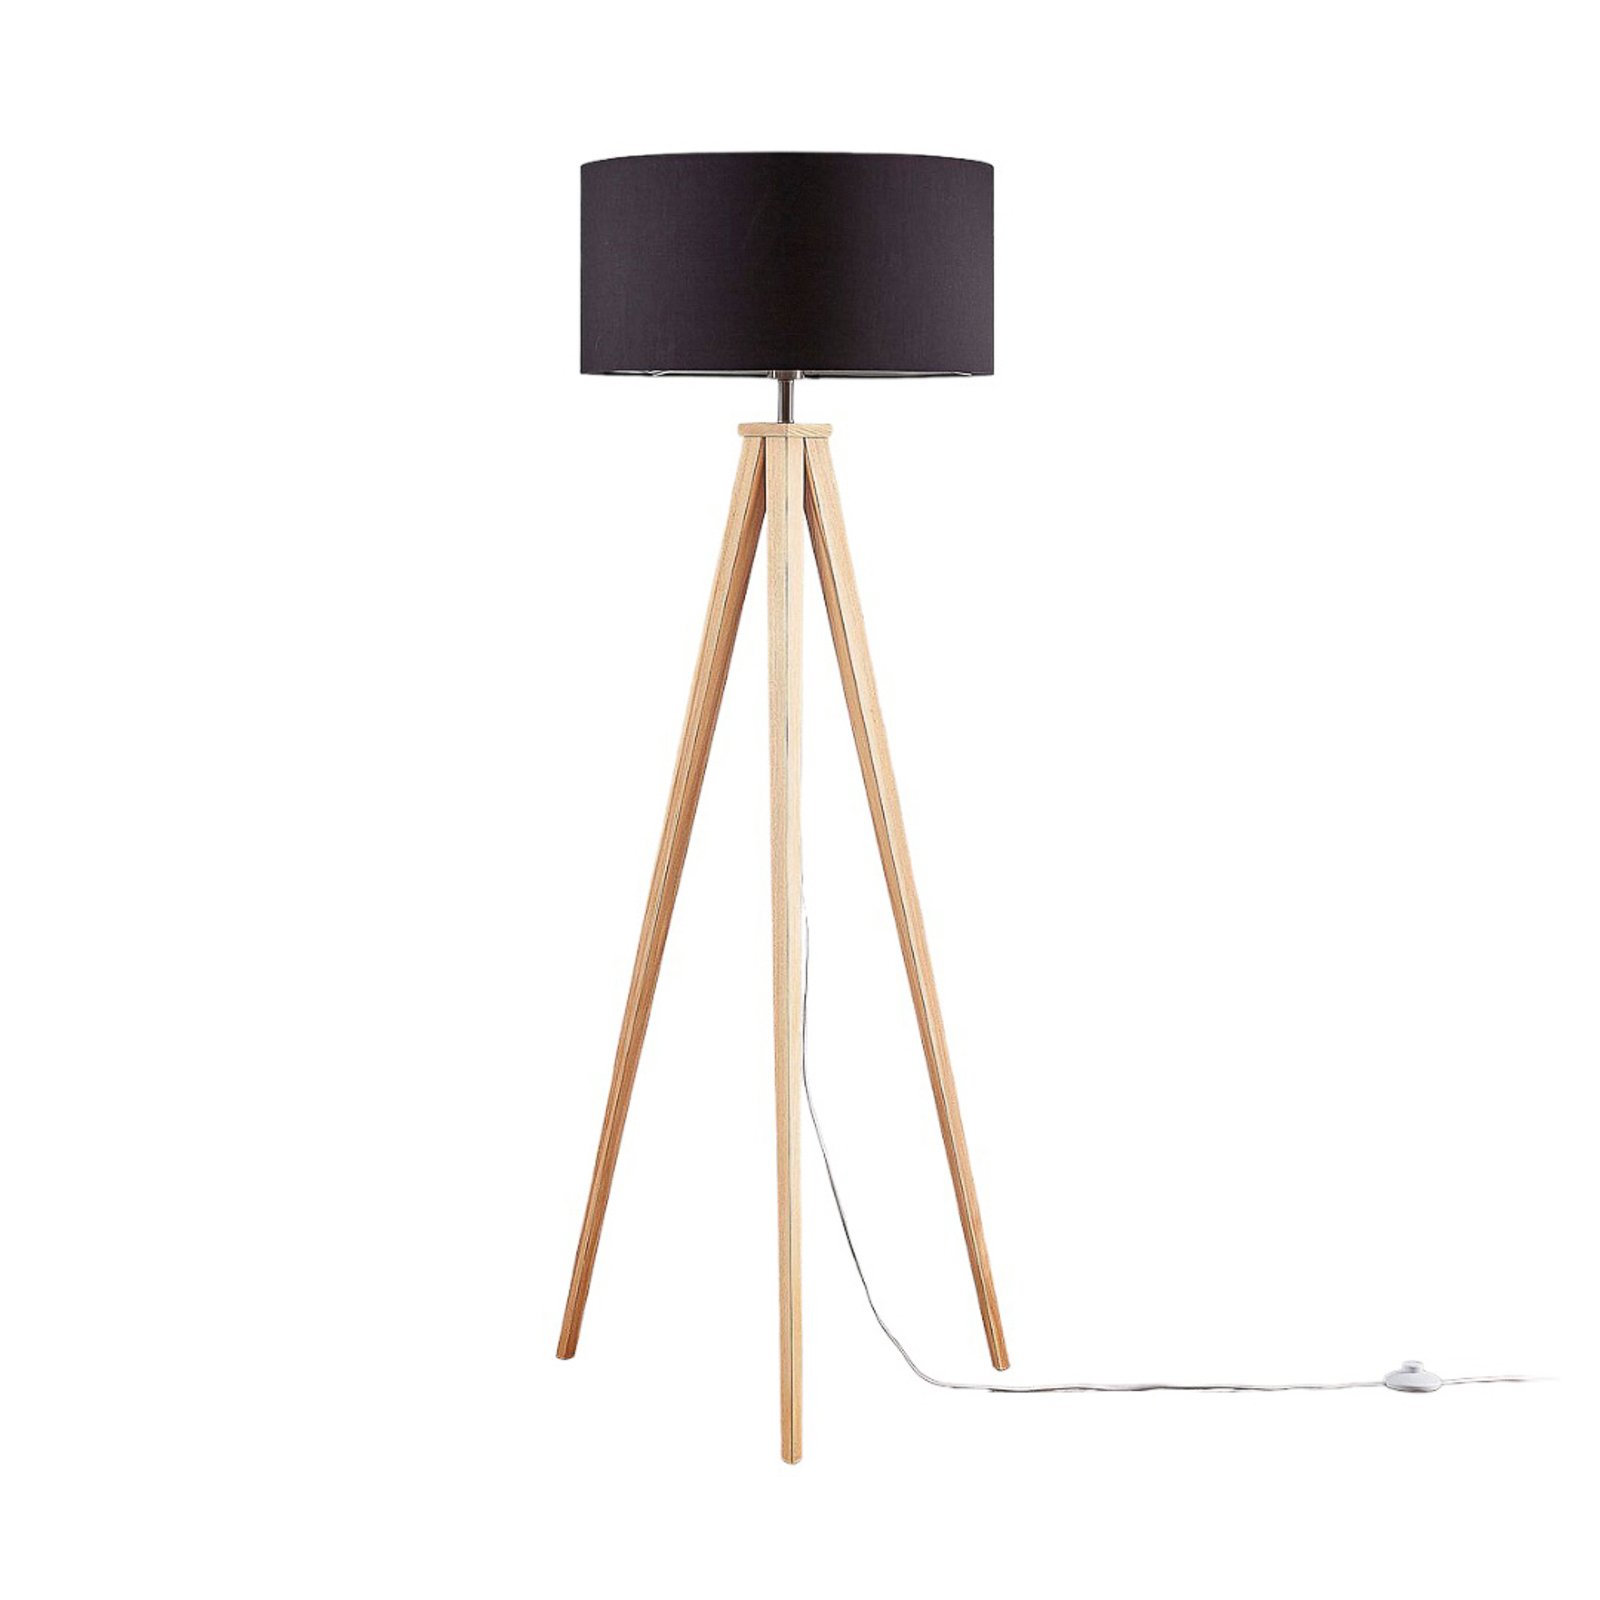 Mya wooden floor lamp with black fabric lampshade